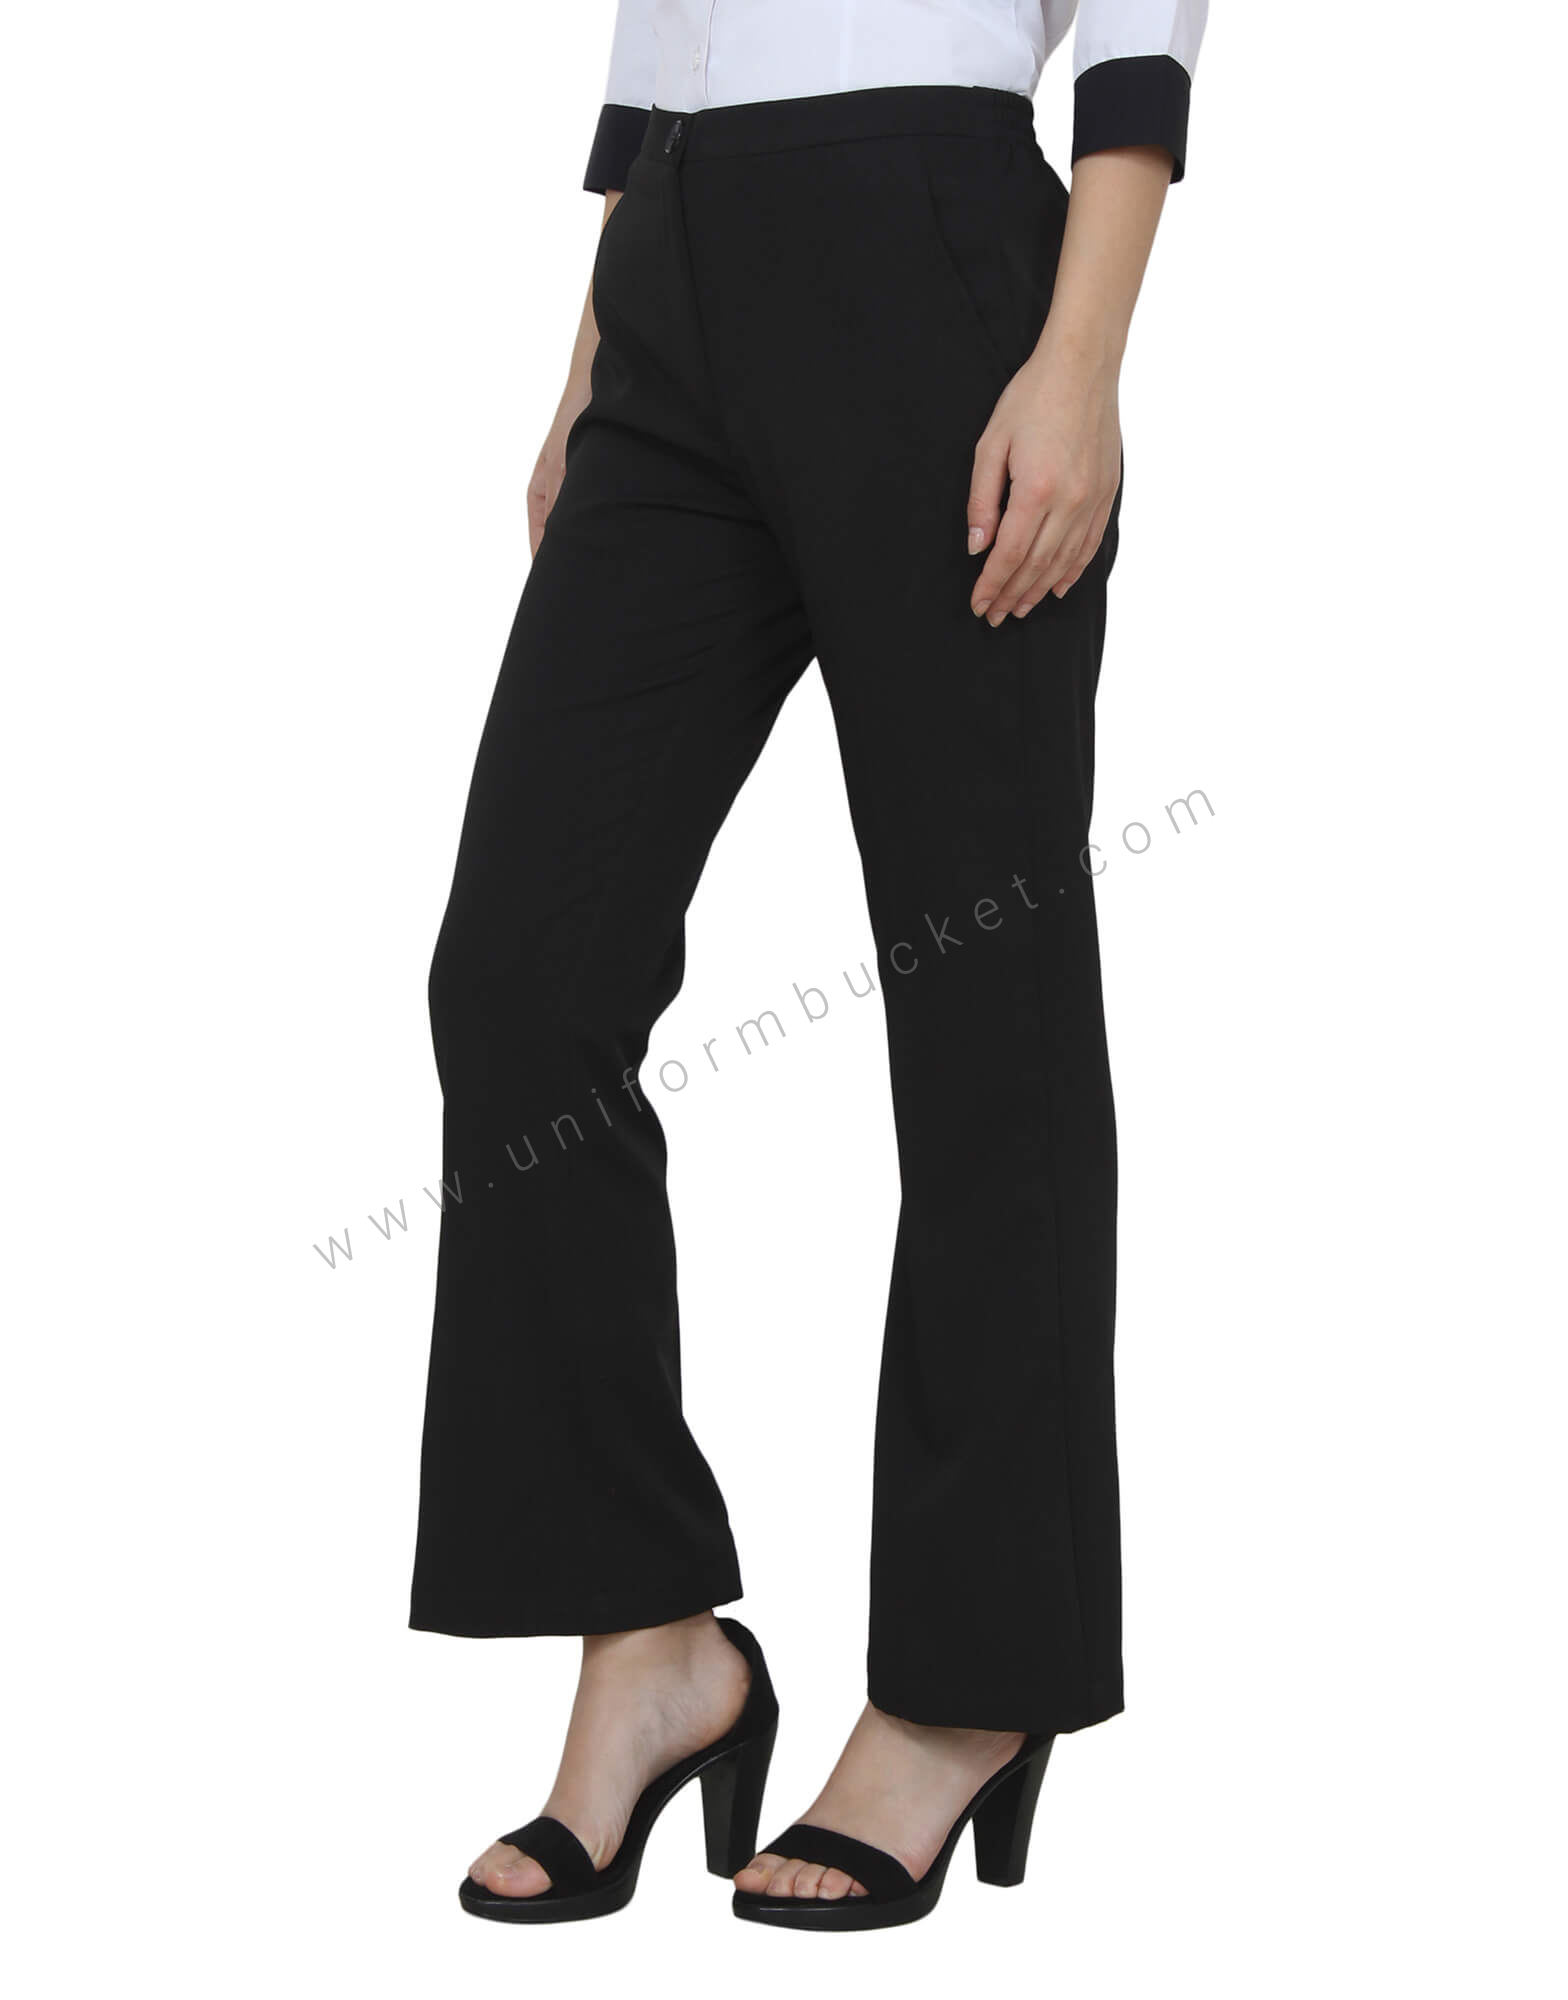 HAORUN Men Bell Bottom Pants 60s 70s Vintage Flare Formal Dress Trousers  Slim Fit Black at Amazon Mens Clothing store